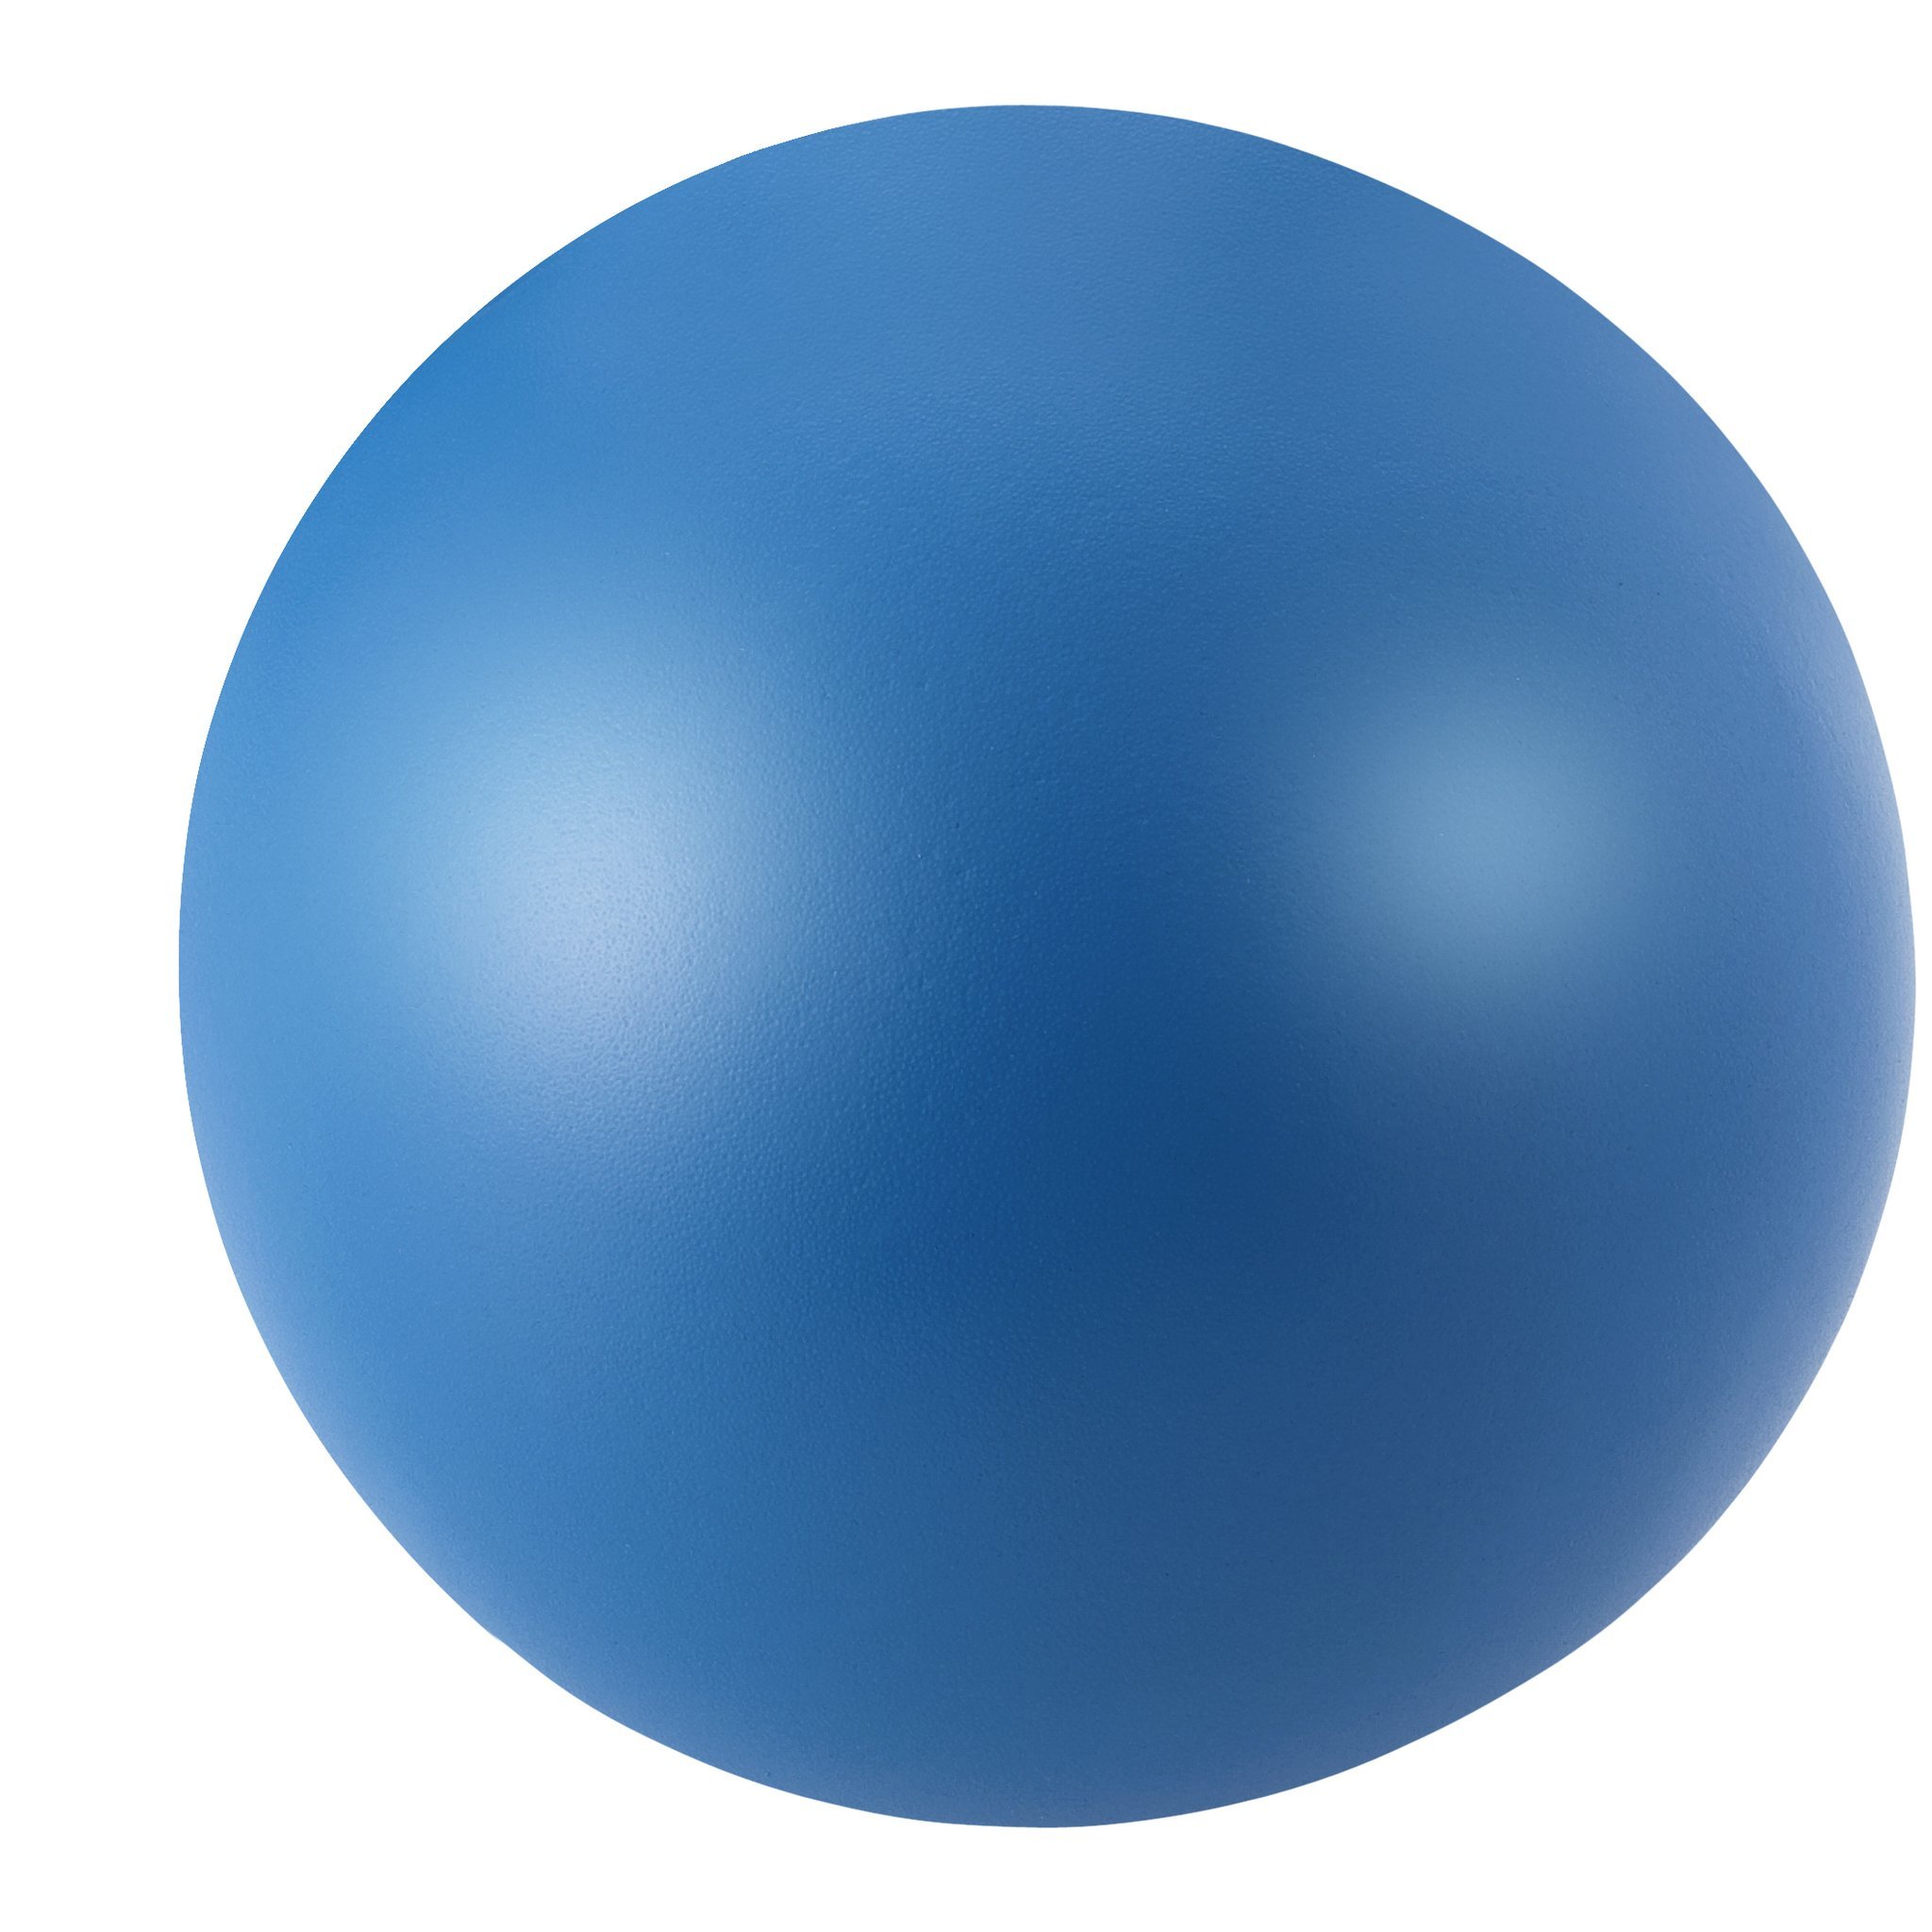 Гладкий упругий шар. Шарик круглый. Синий шарик круглый. Мячик круглый. Матовый шар.